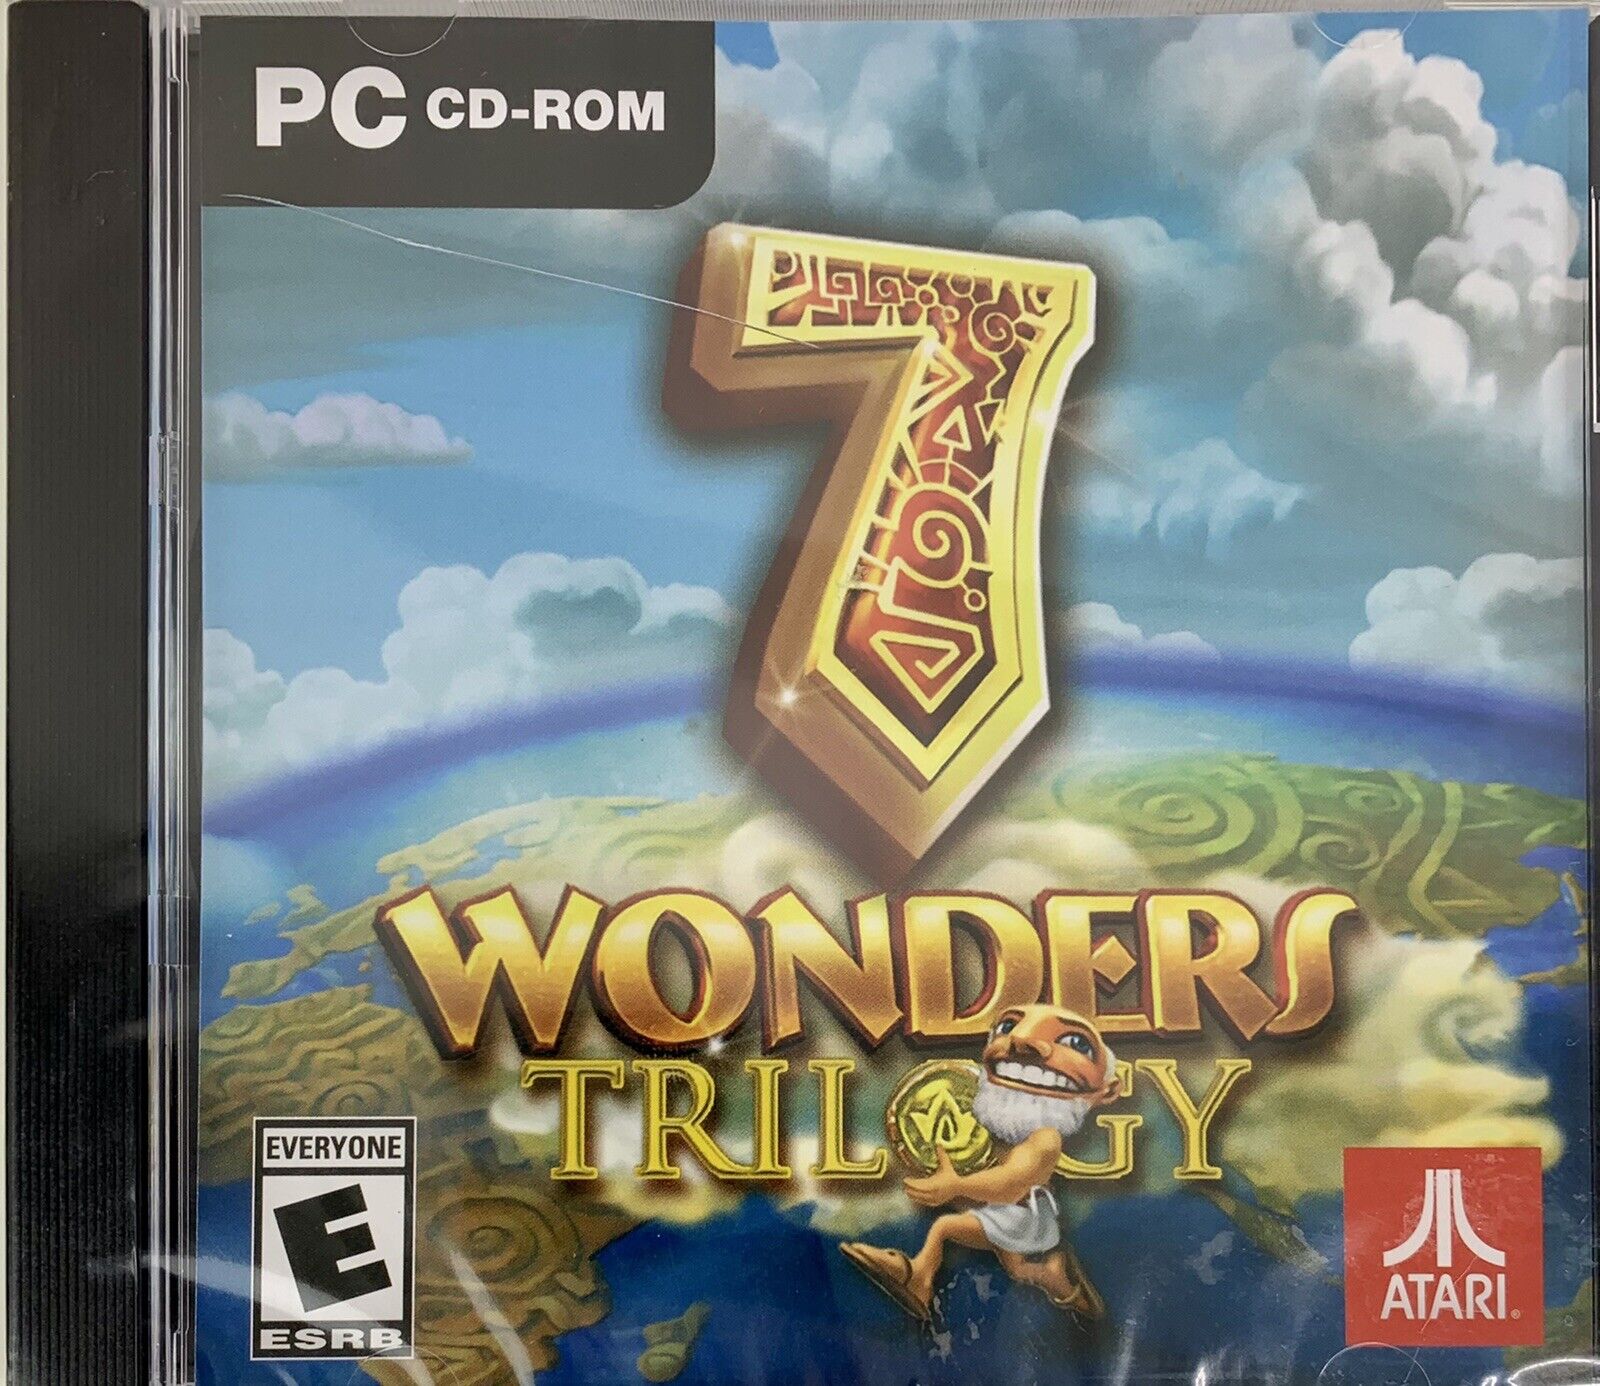 7 Wonders Trilogy PC CD-ROM Video Game 3 Pack Atari Brand New Factory Sealed